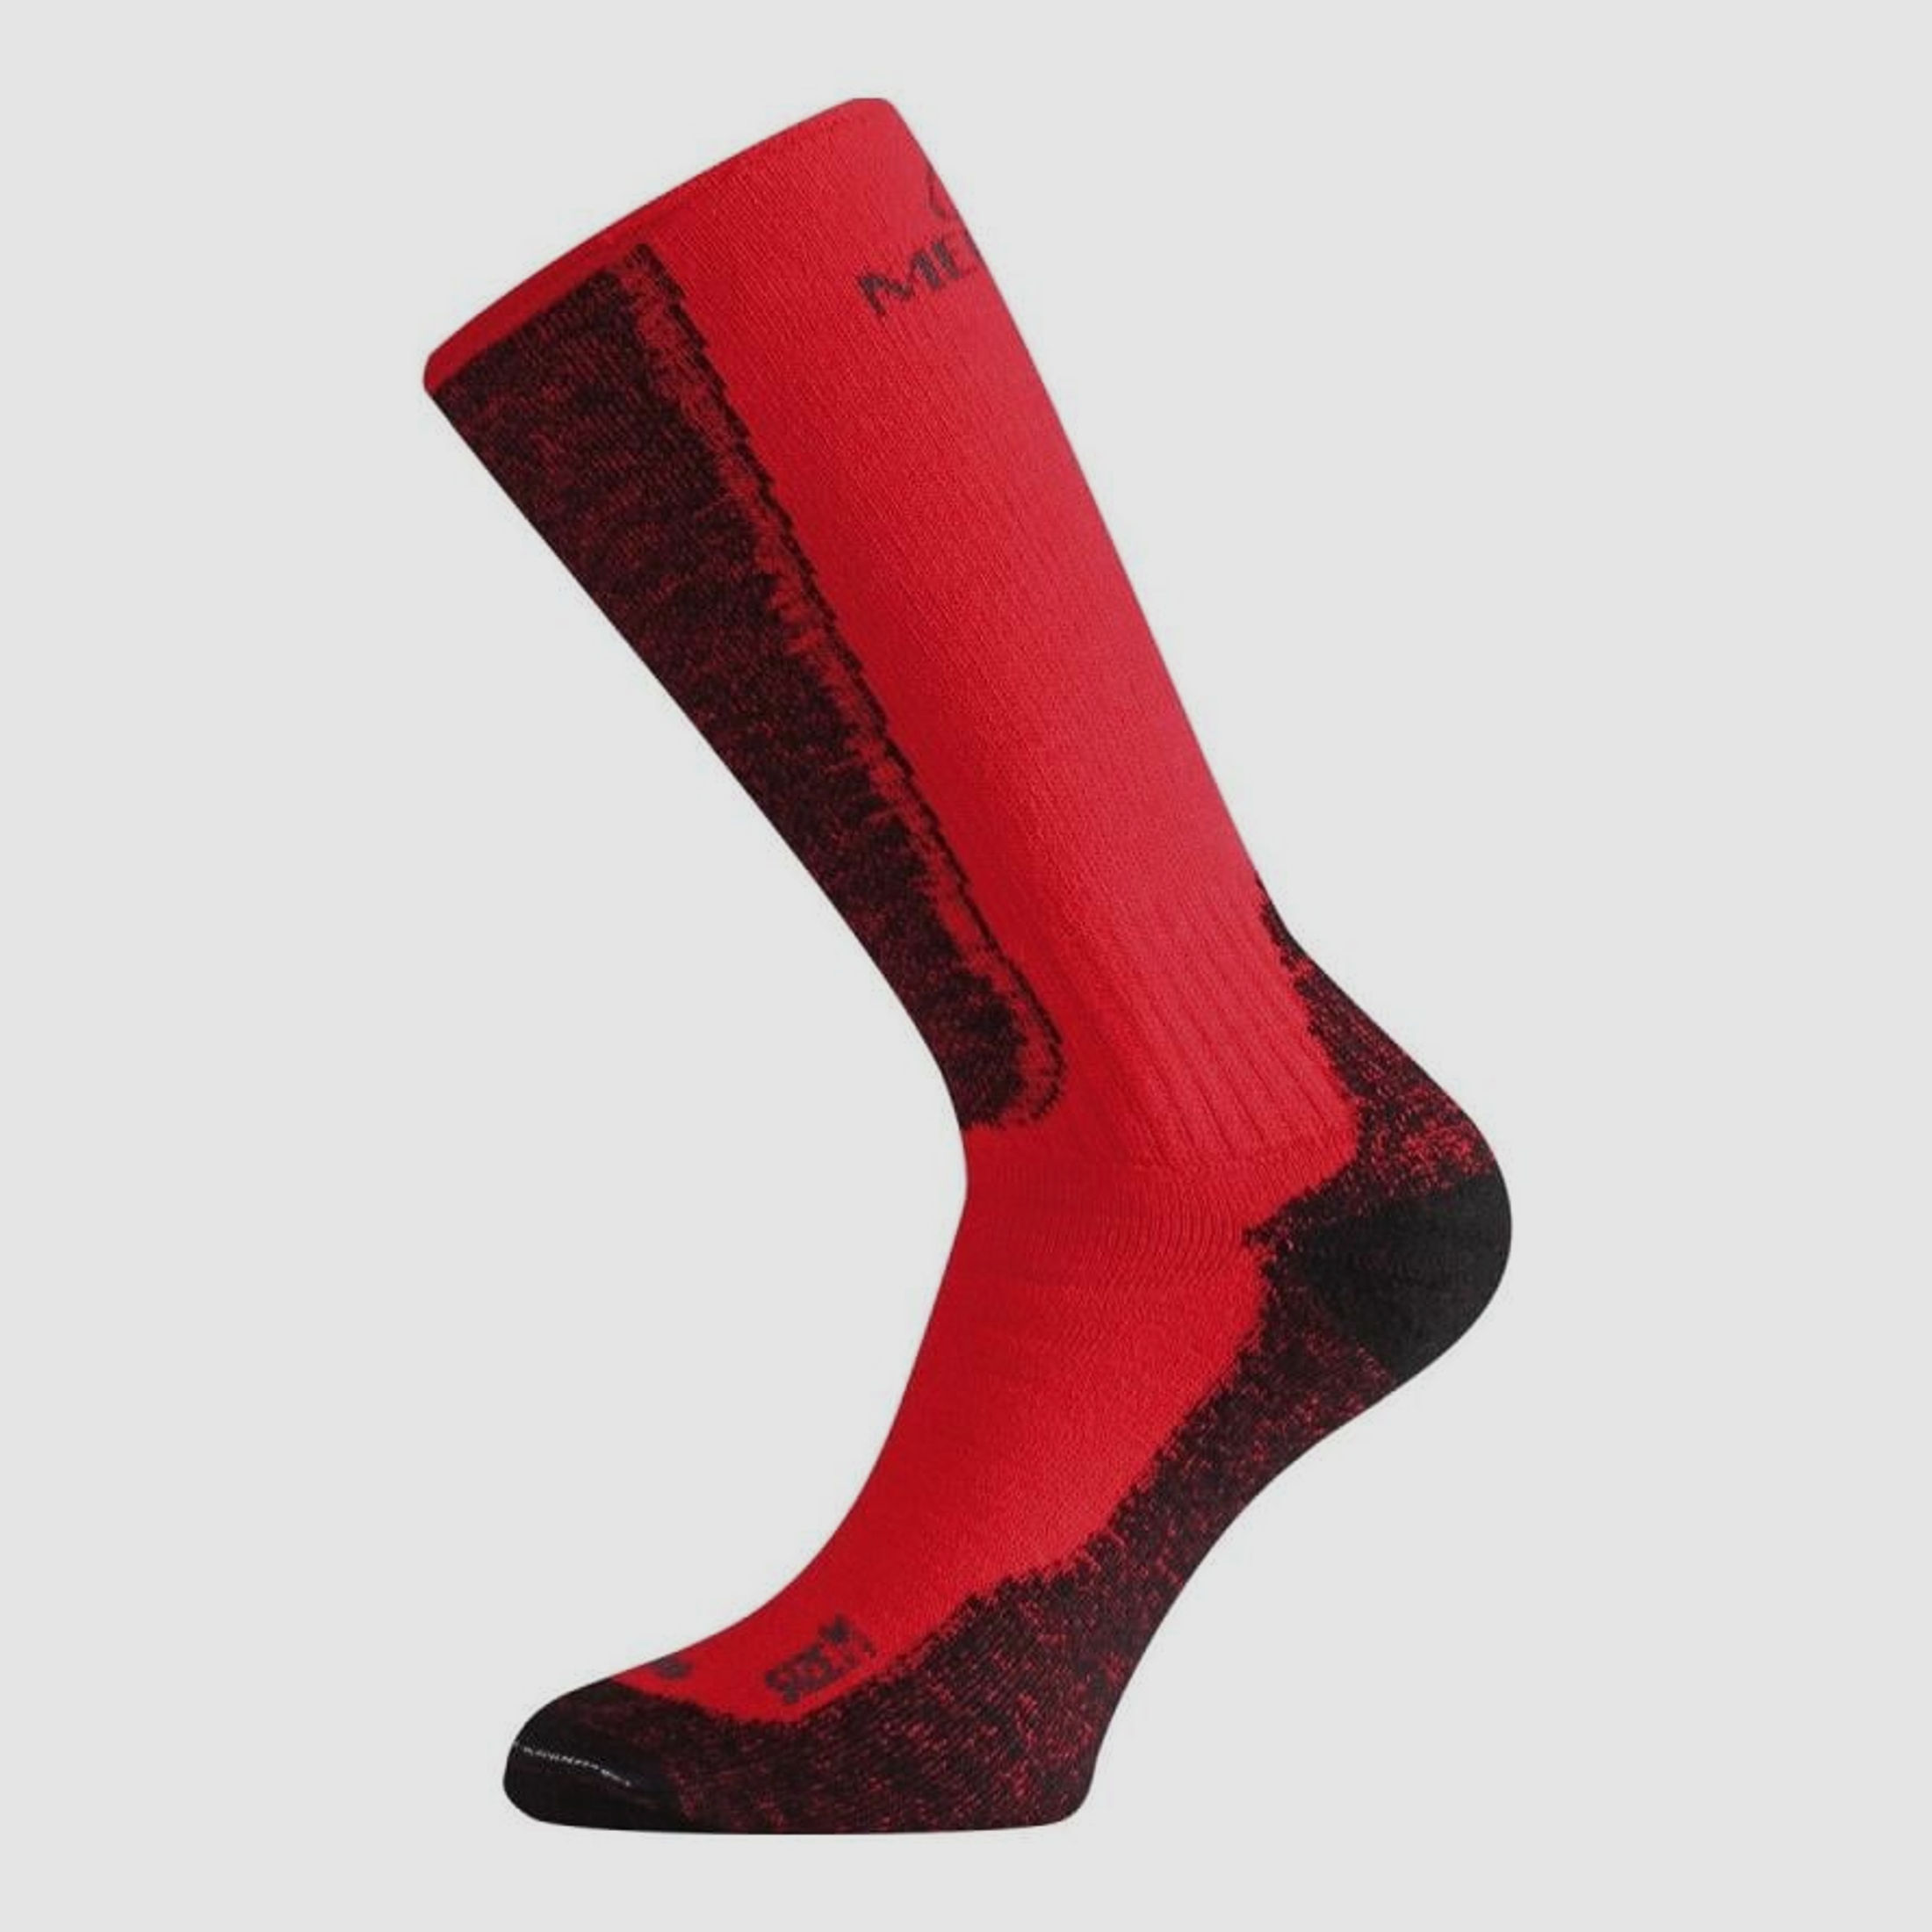 Lasting Warme Merino WSM Trekking-Socken Rot    S (EU 34-37)